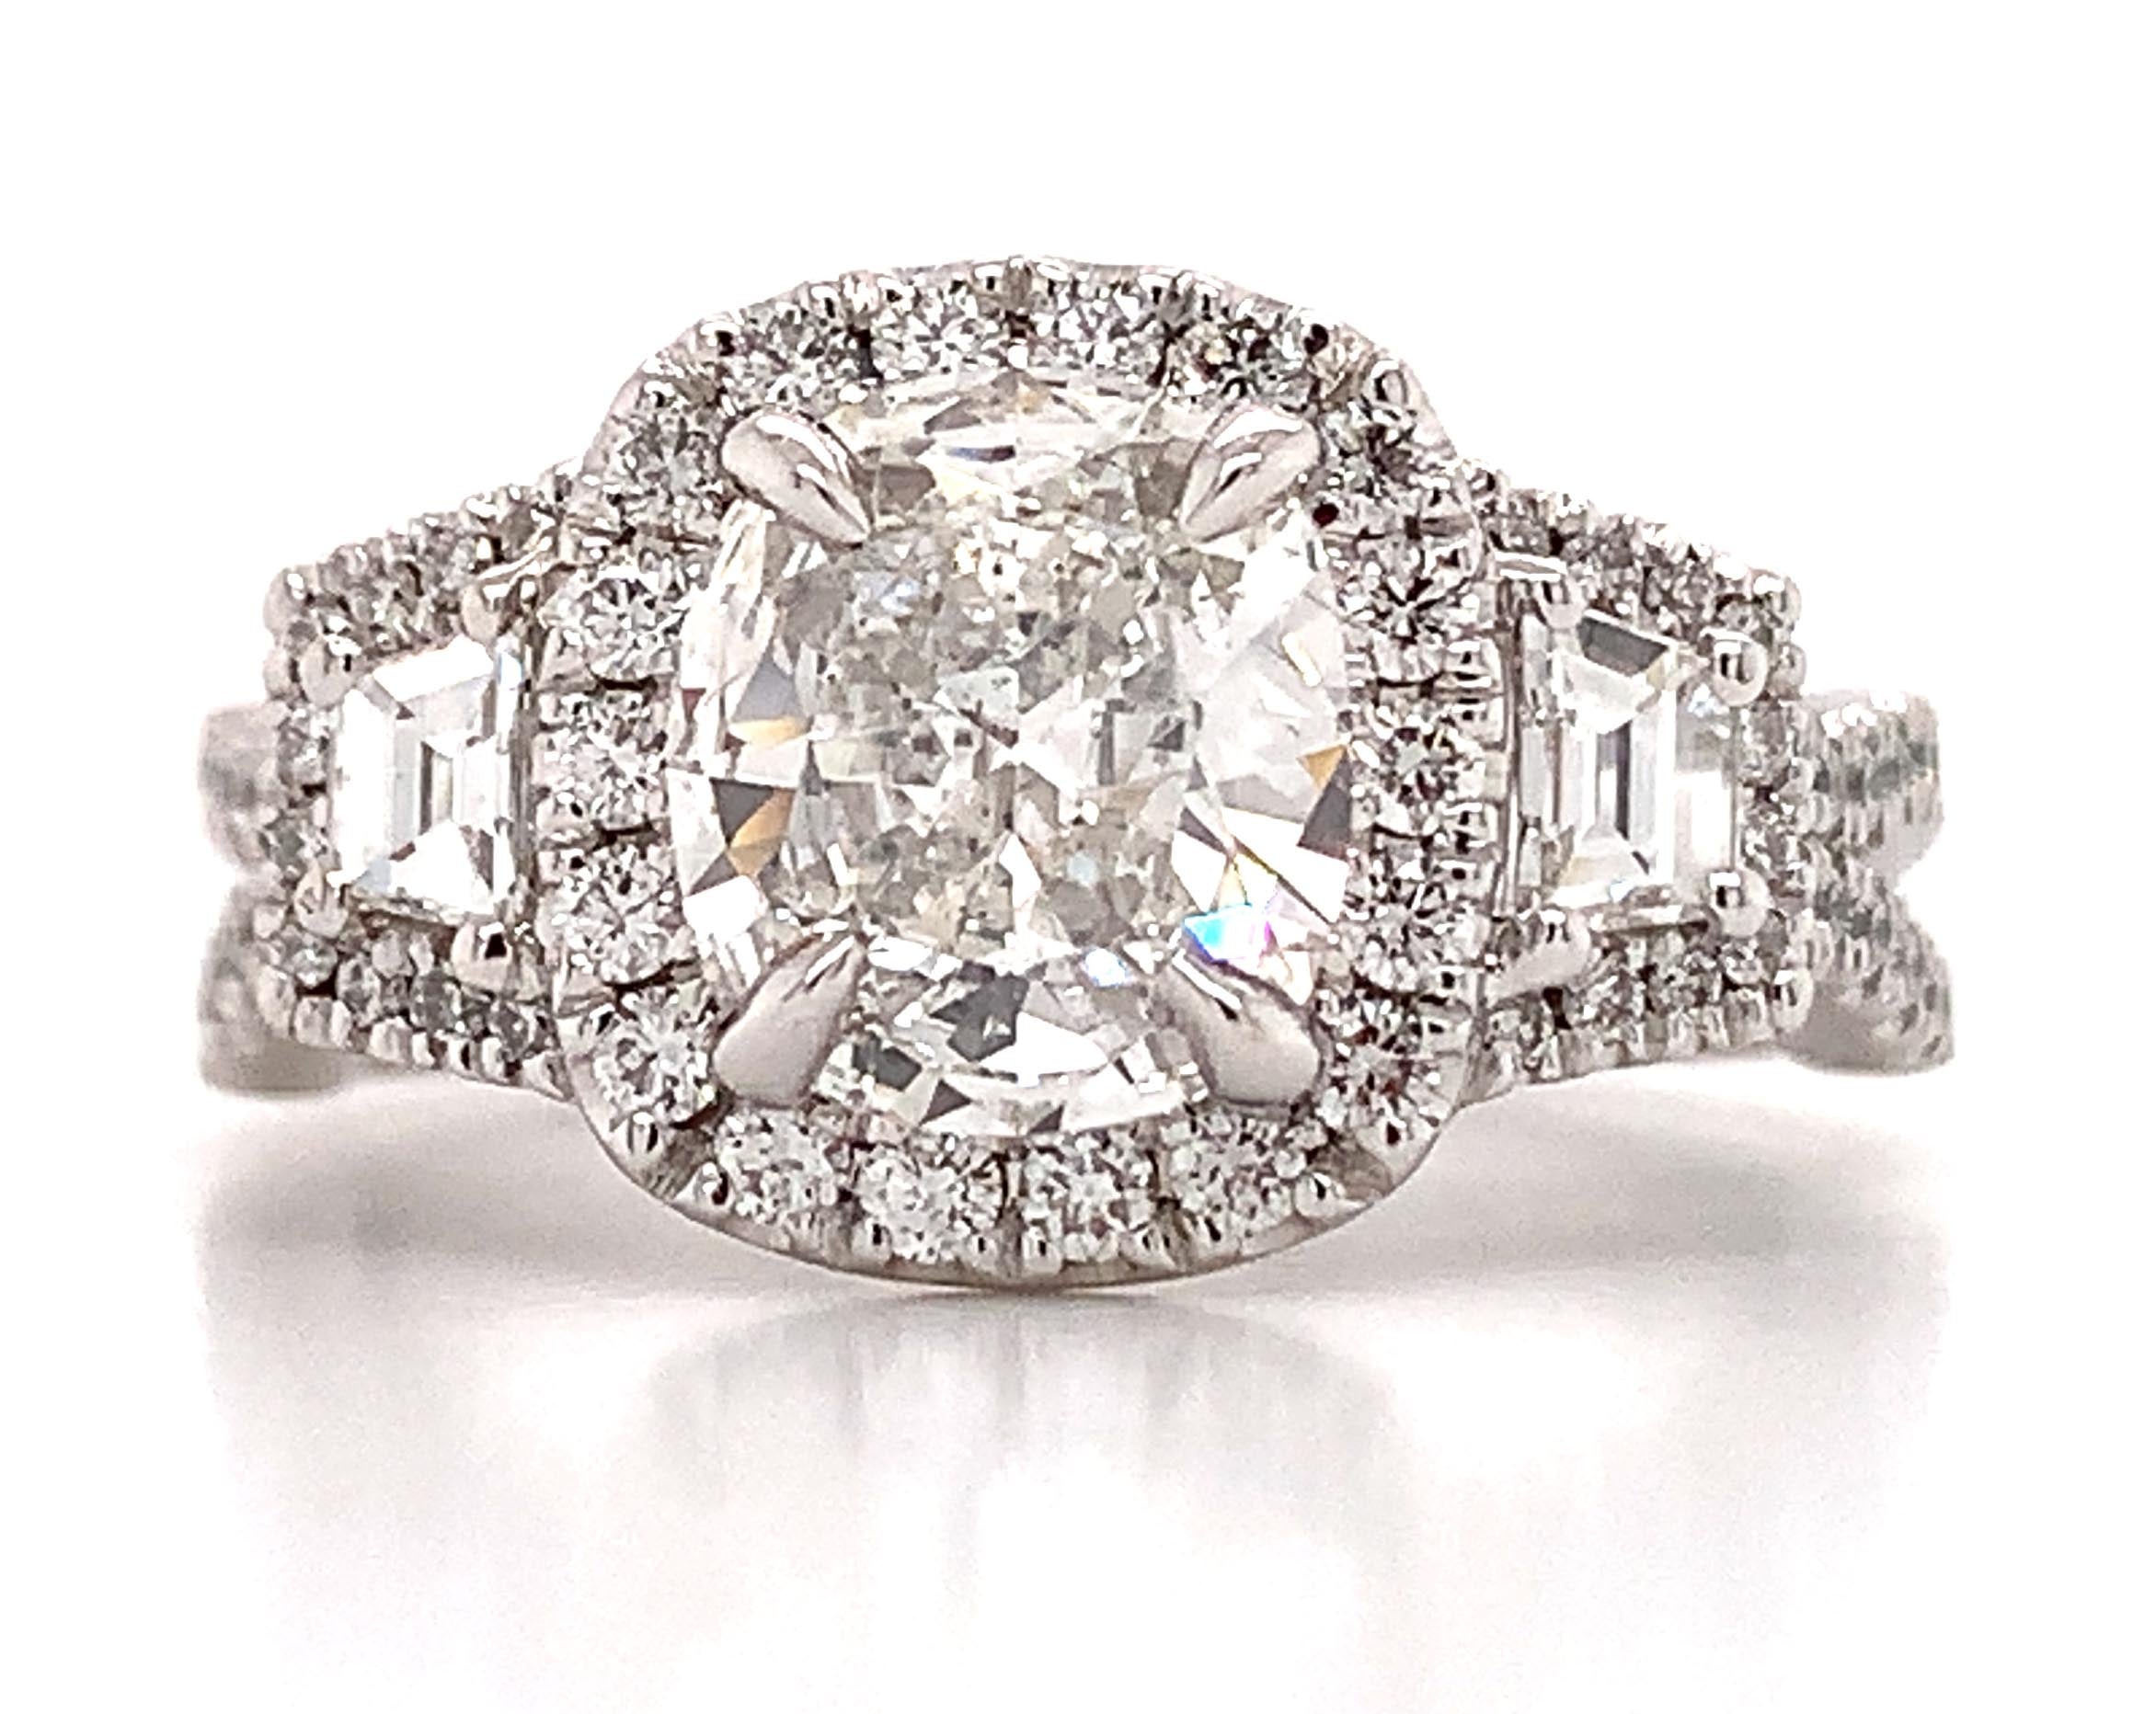 2.36ctw Henri Daussi Cushion-cut Three Stone GIA certified Engagement Anniversary Ring